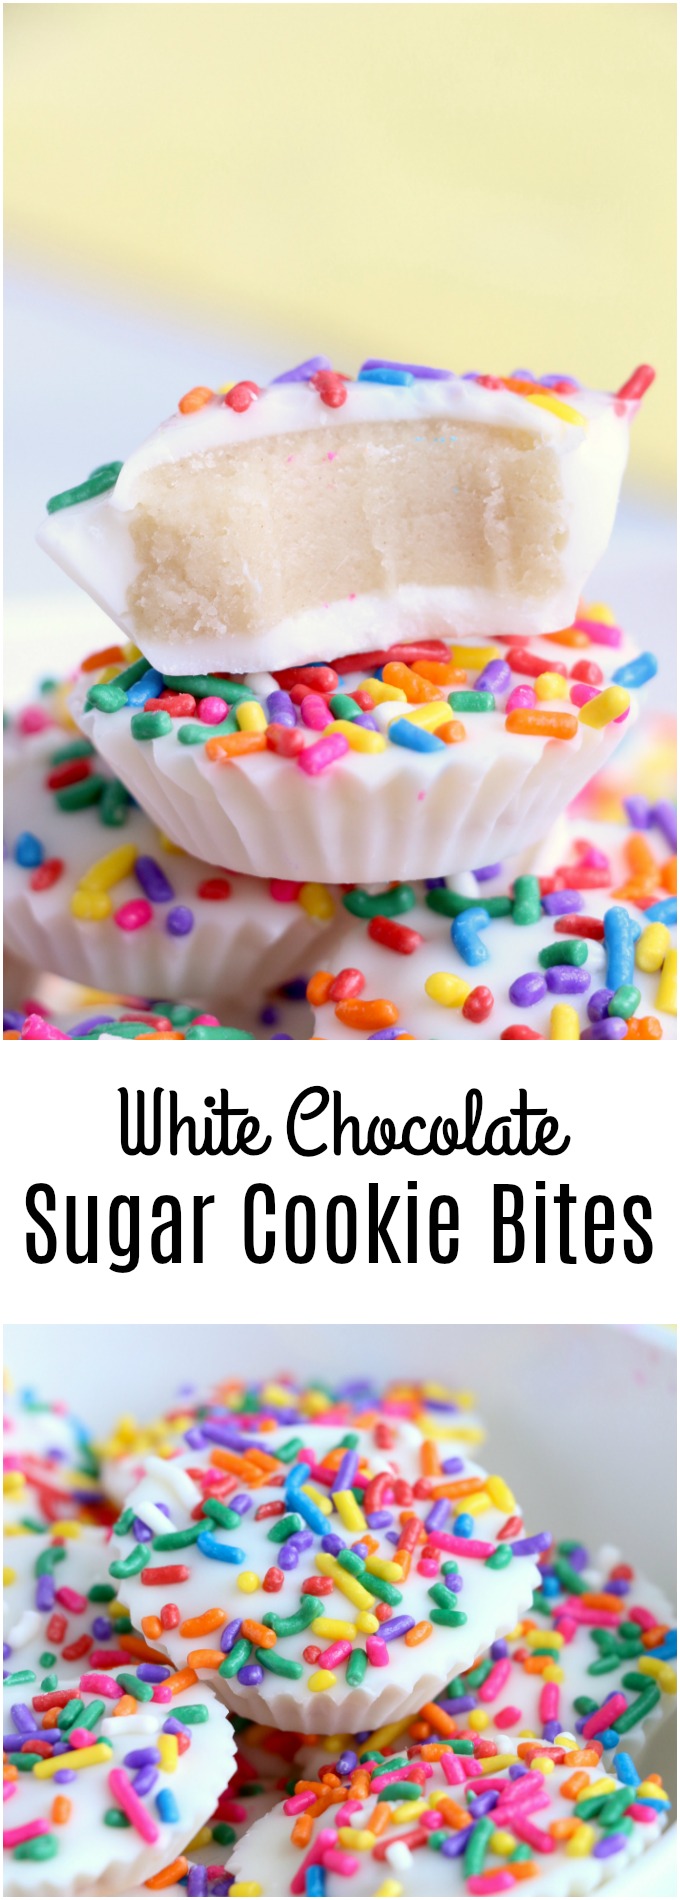 White Chocolate Sugar Cookie Bites Recipe